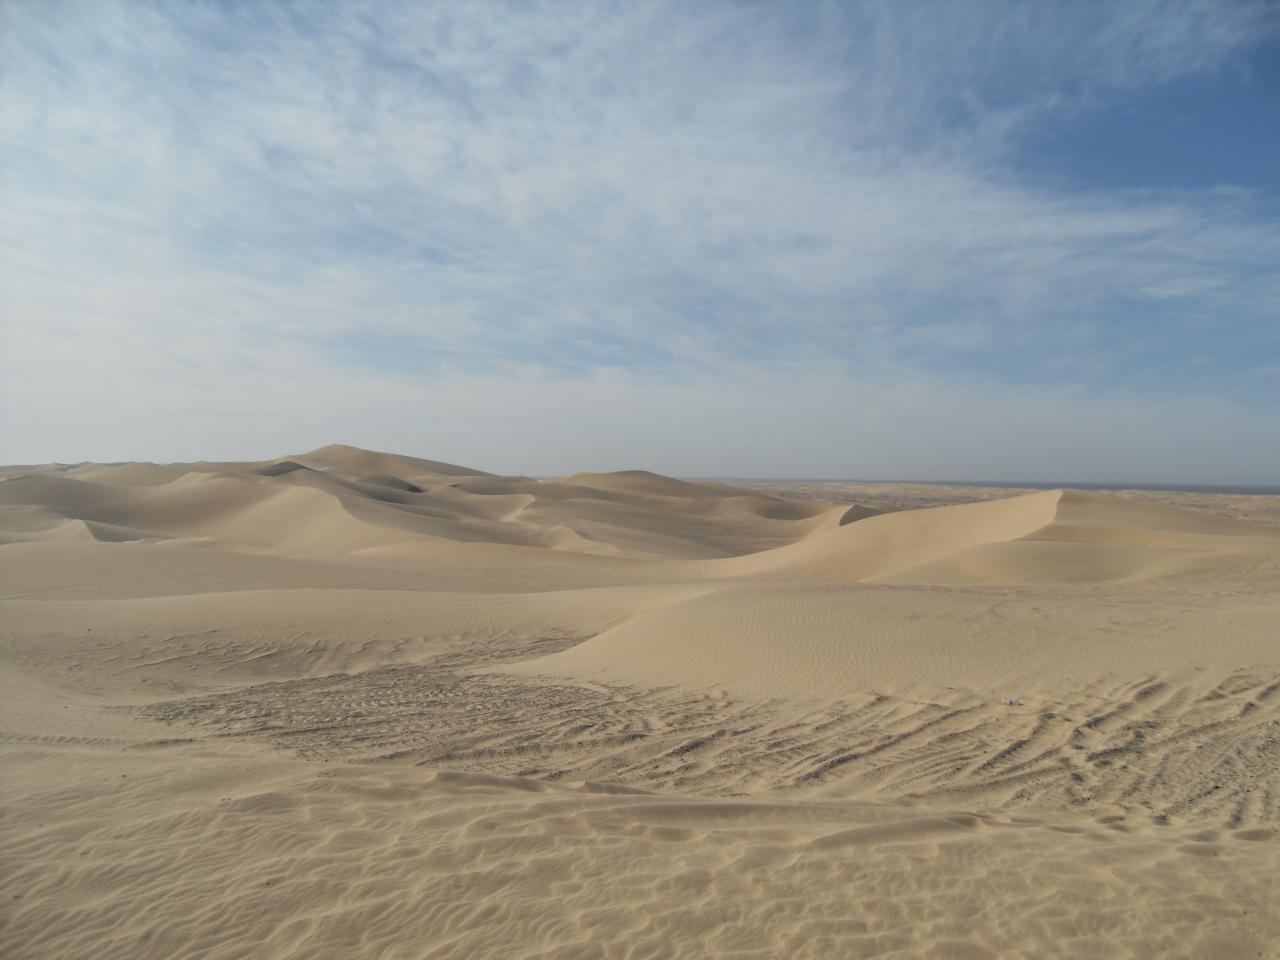 Glamis sand dunes. So peaceful.